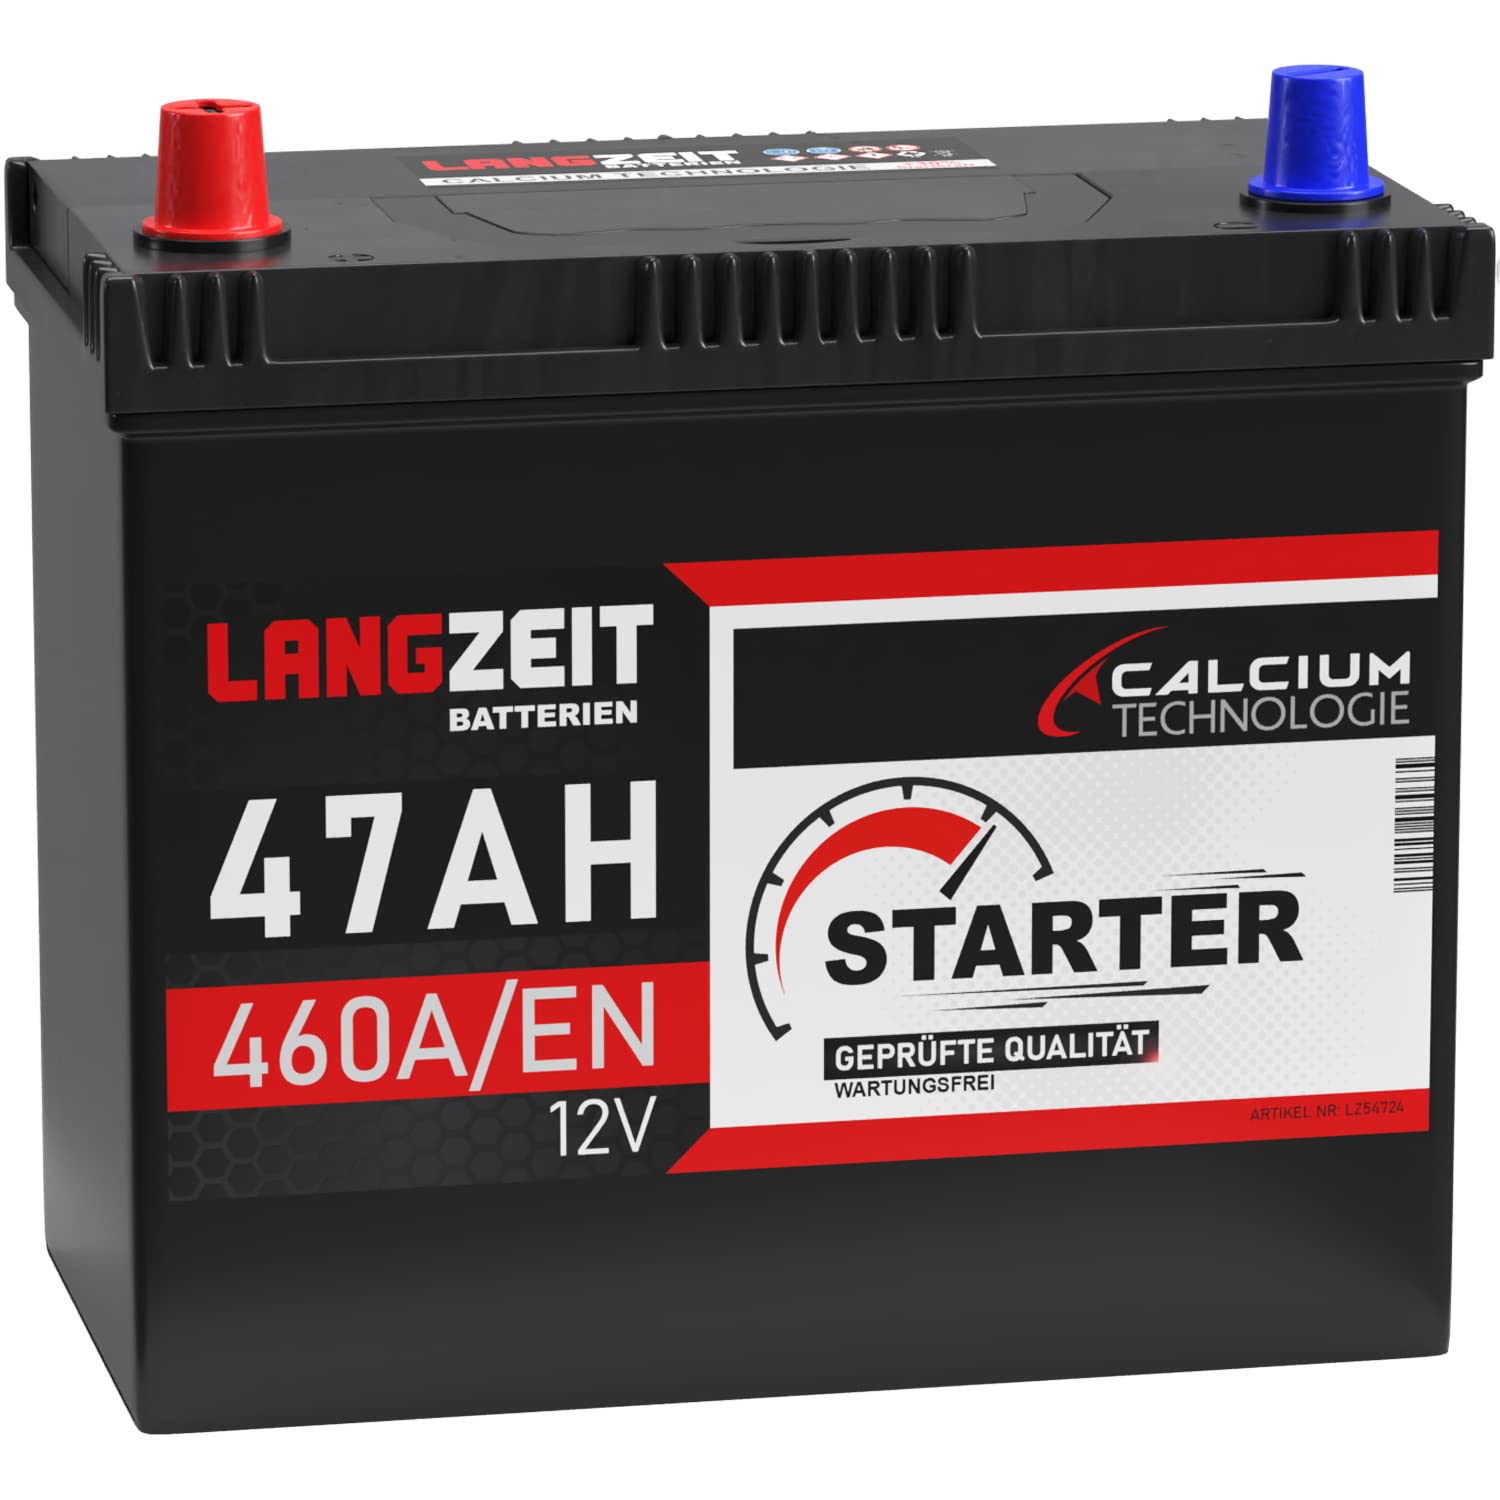 LANGZEIT ASIA Autobatterie 47Ah 12V 460A/EN ASIA Batterie Plus-Pol Links 30% mehr Startleistung ersetzt 45Ah von LANGZEIT Batterien